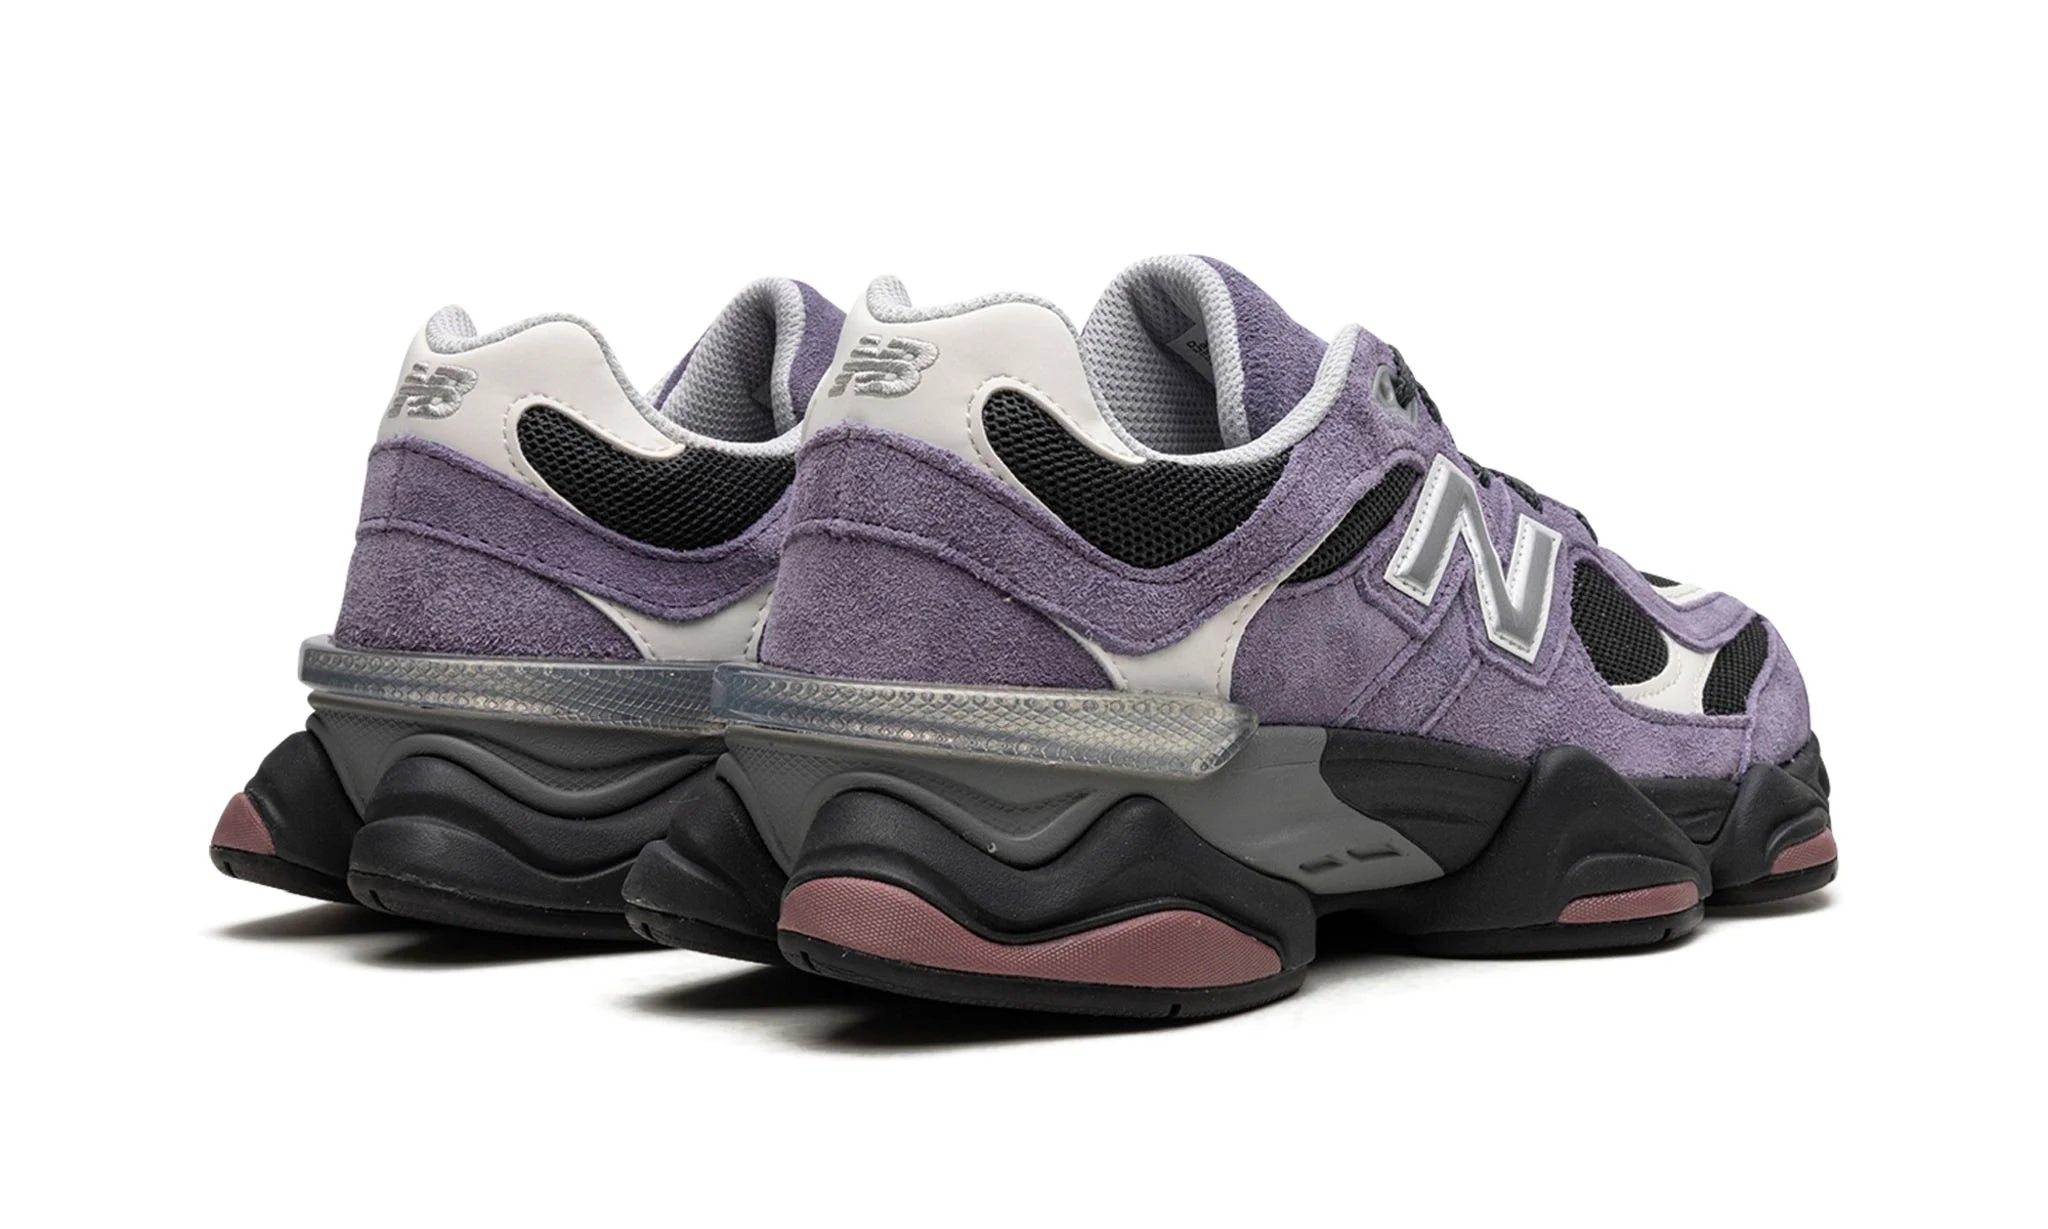 New Balance 9060 "Violet Noir"